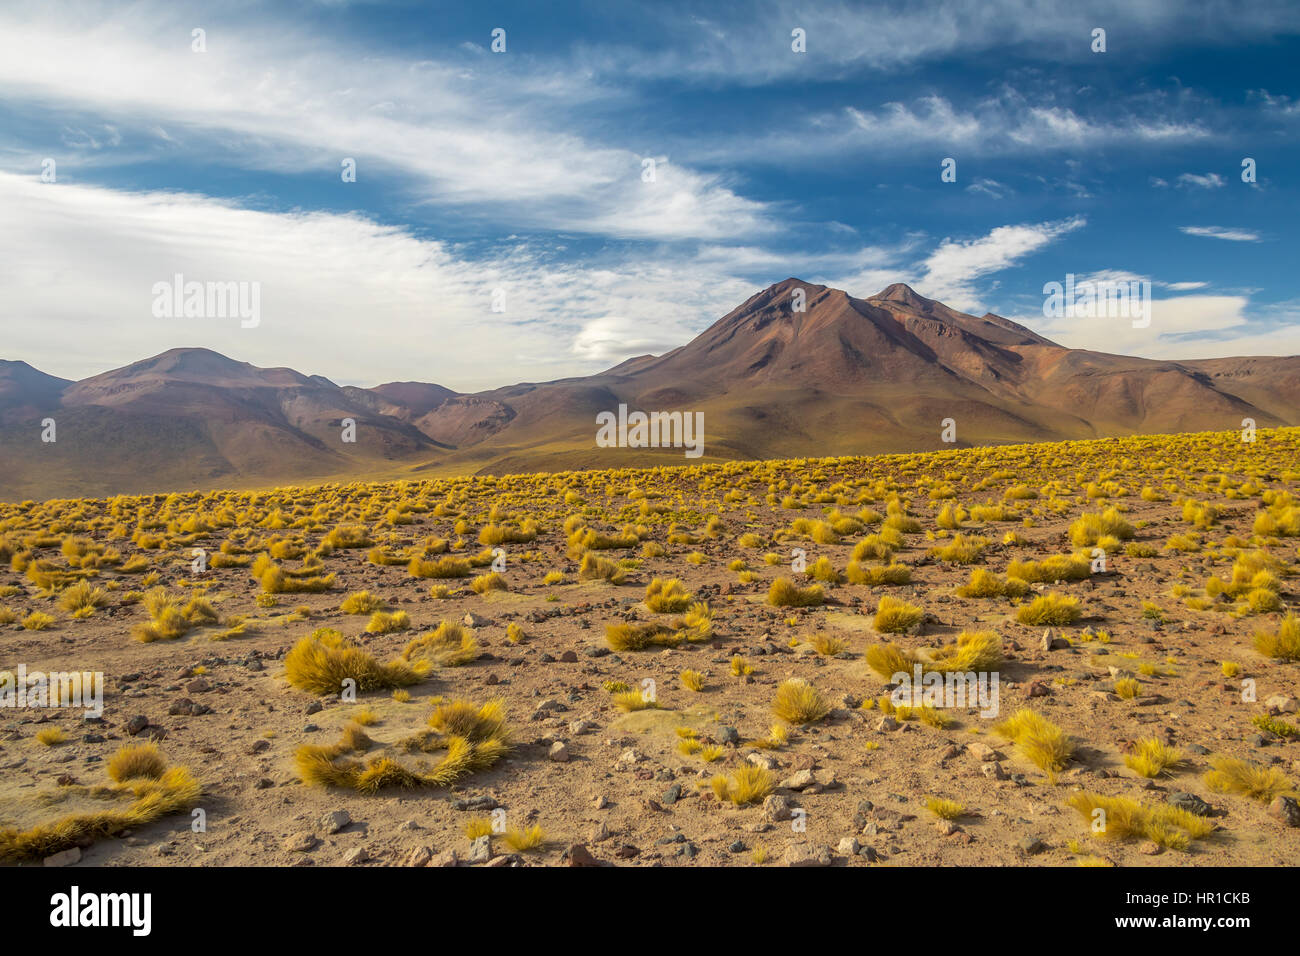 Atacama Desert vegetation and mountains - Chile - Chile Stock Photo